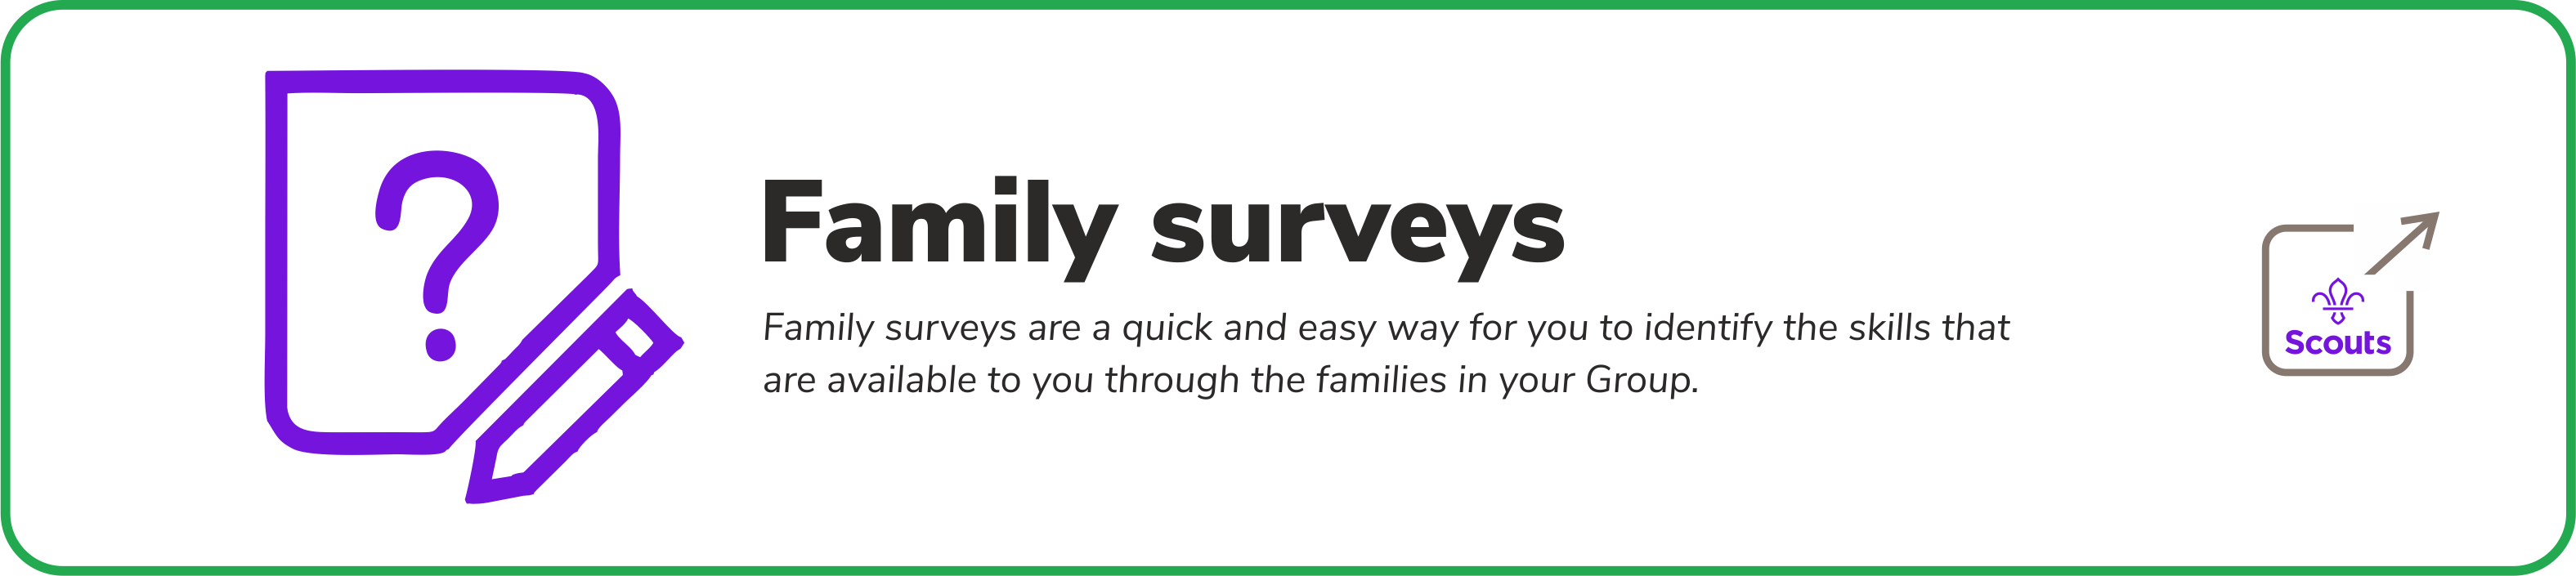 Family surveys